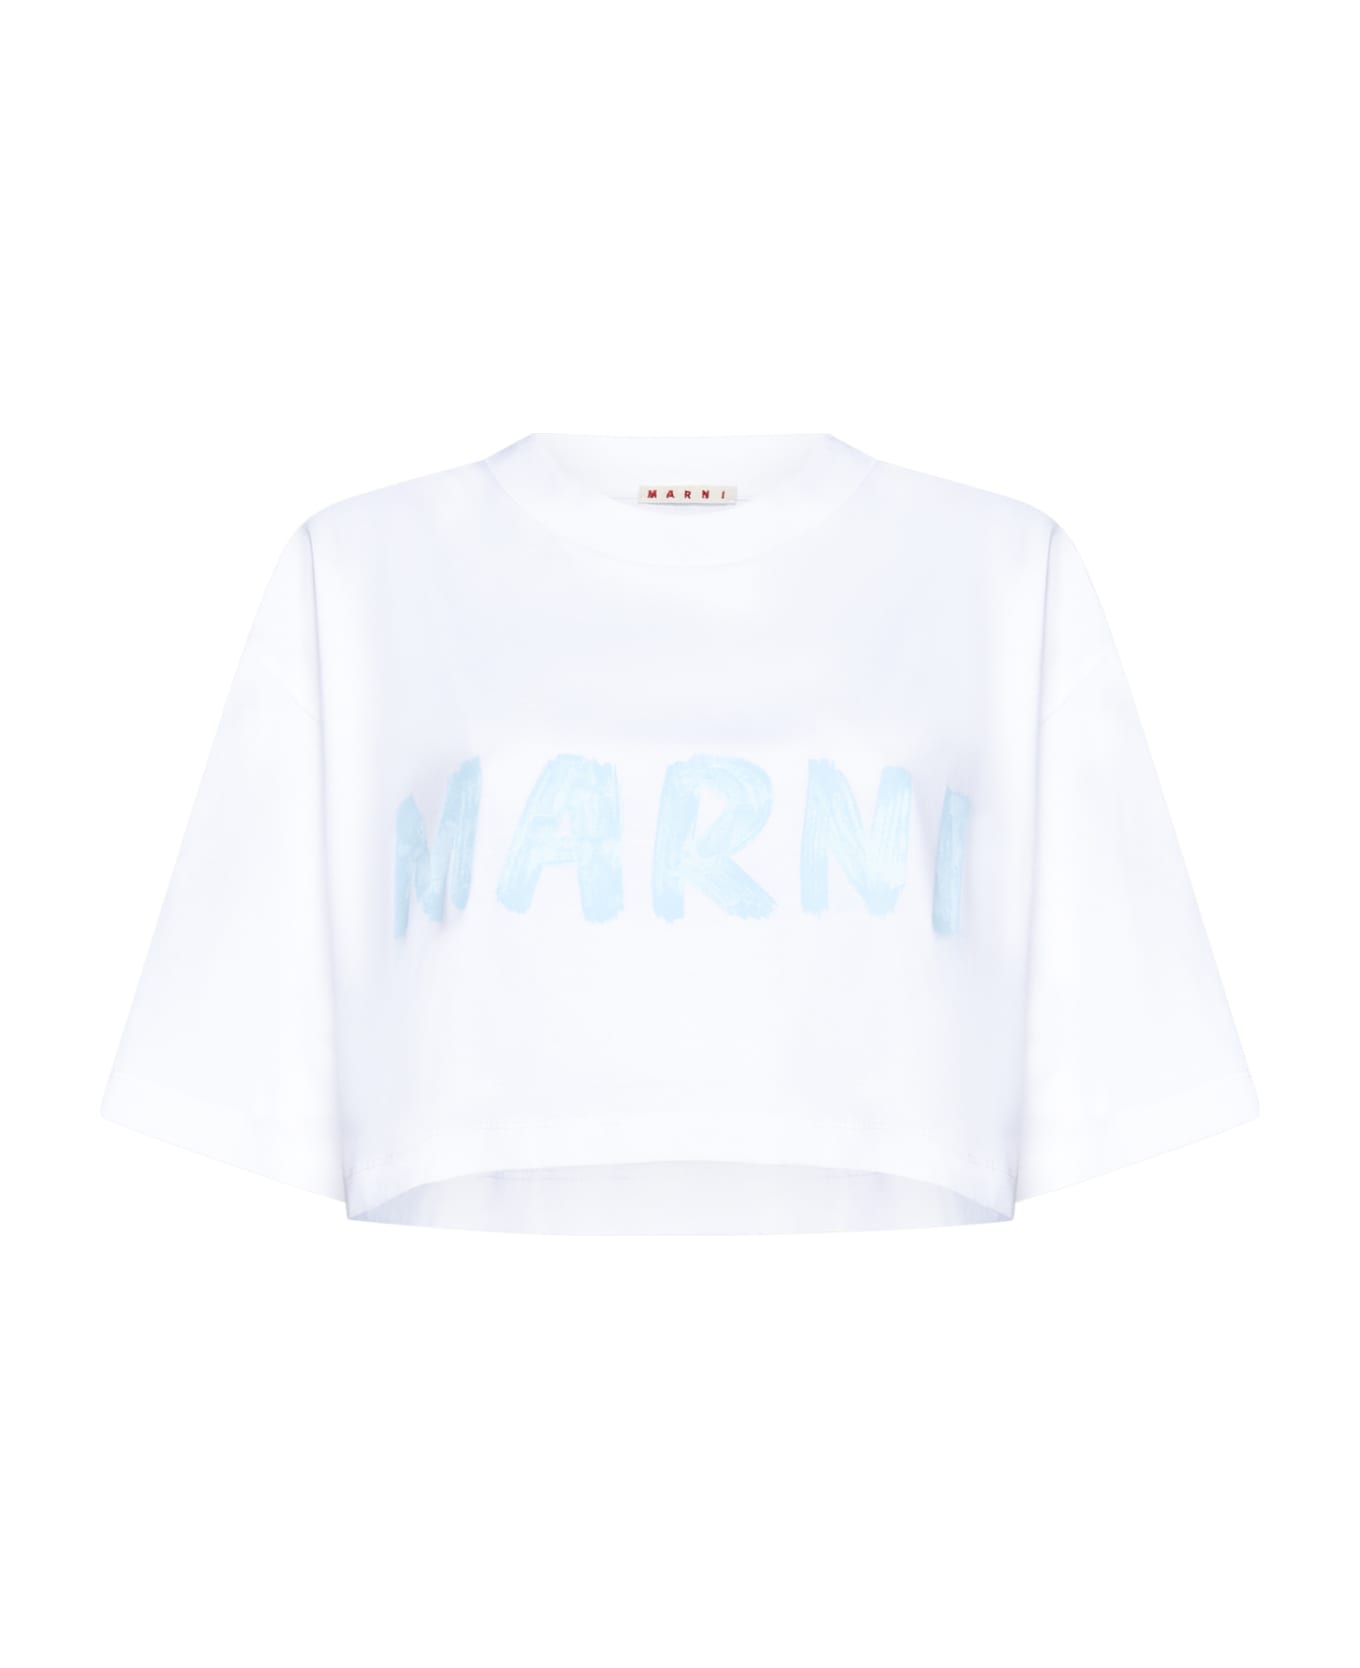 Marni T-Shirt - Lily white Tシャツ